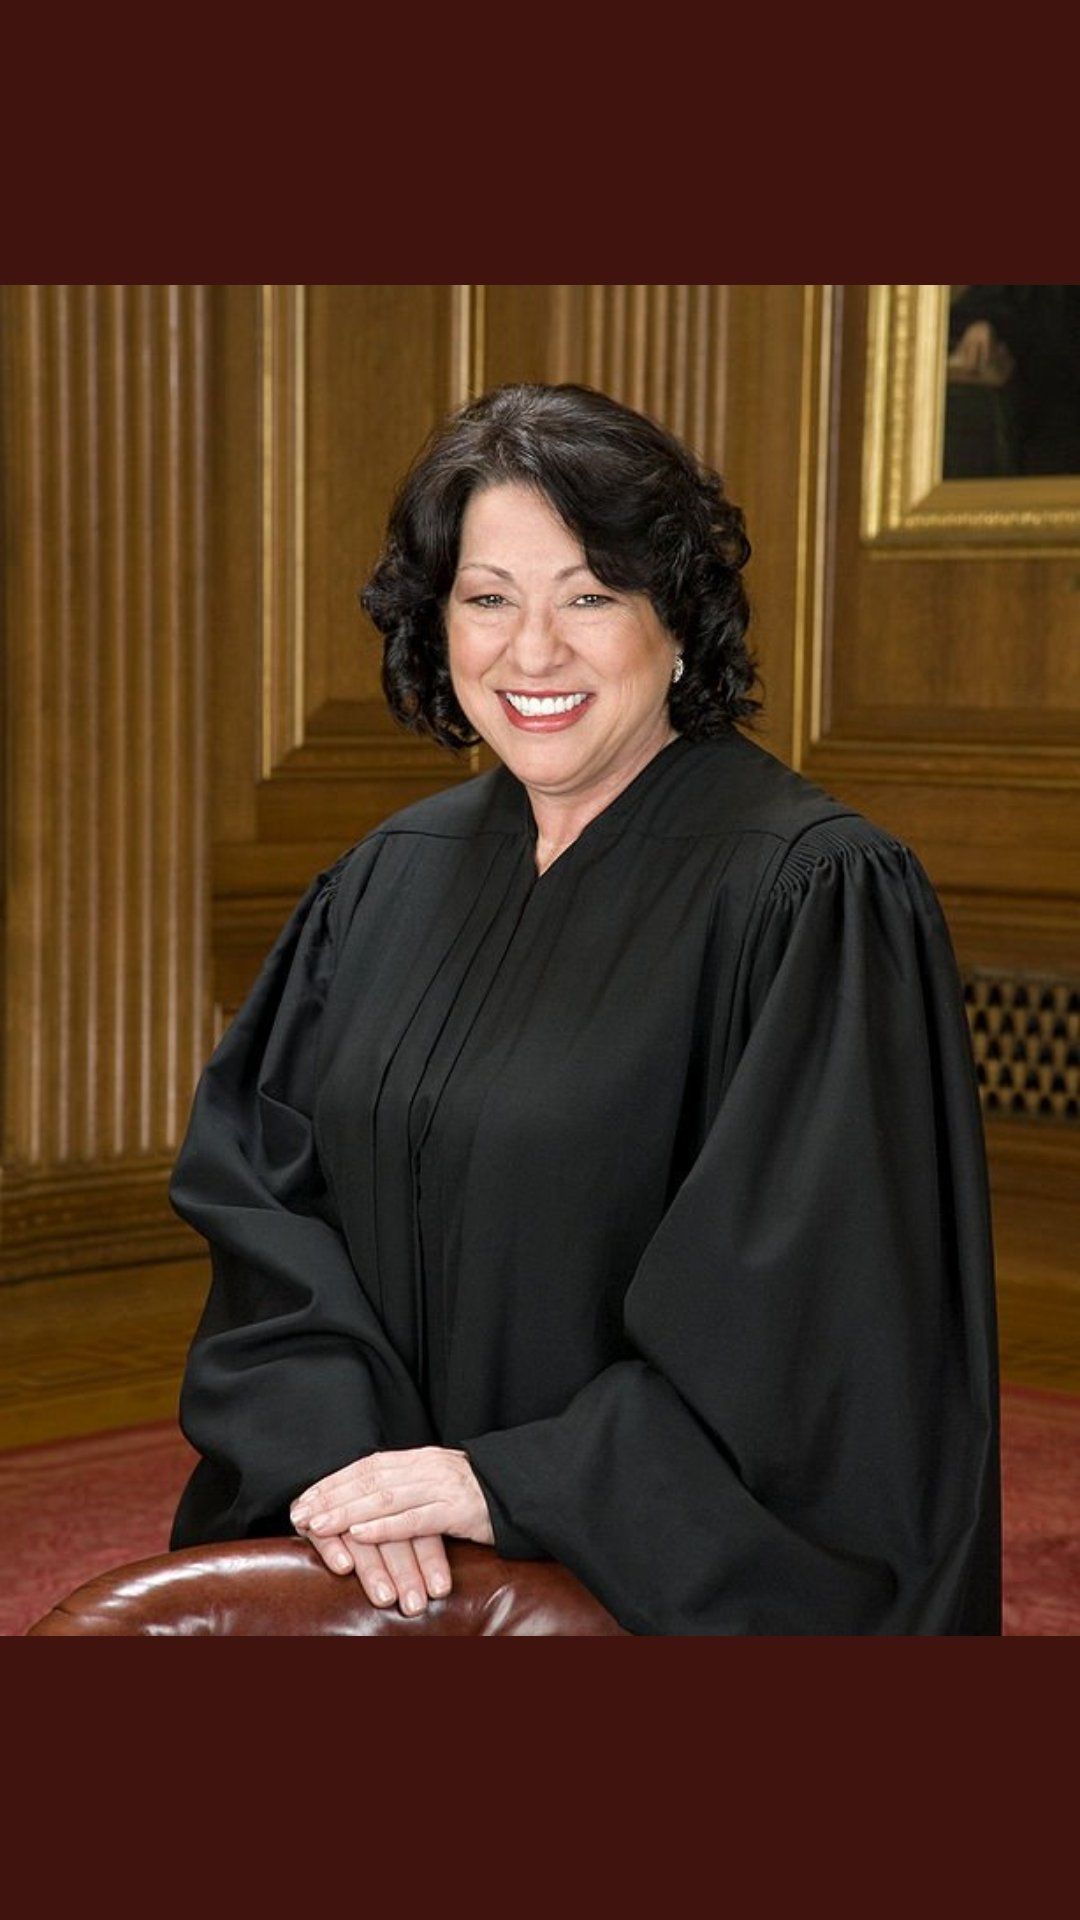 Happy Birthday to U.S. Supreme Court Justice Sonia Sotomayor! 